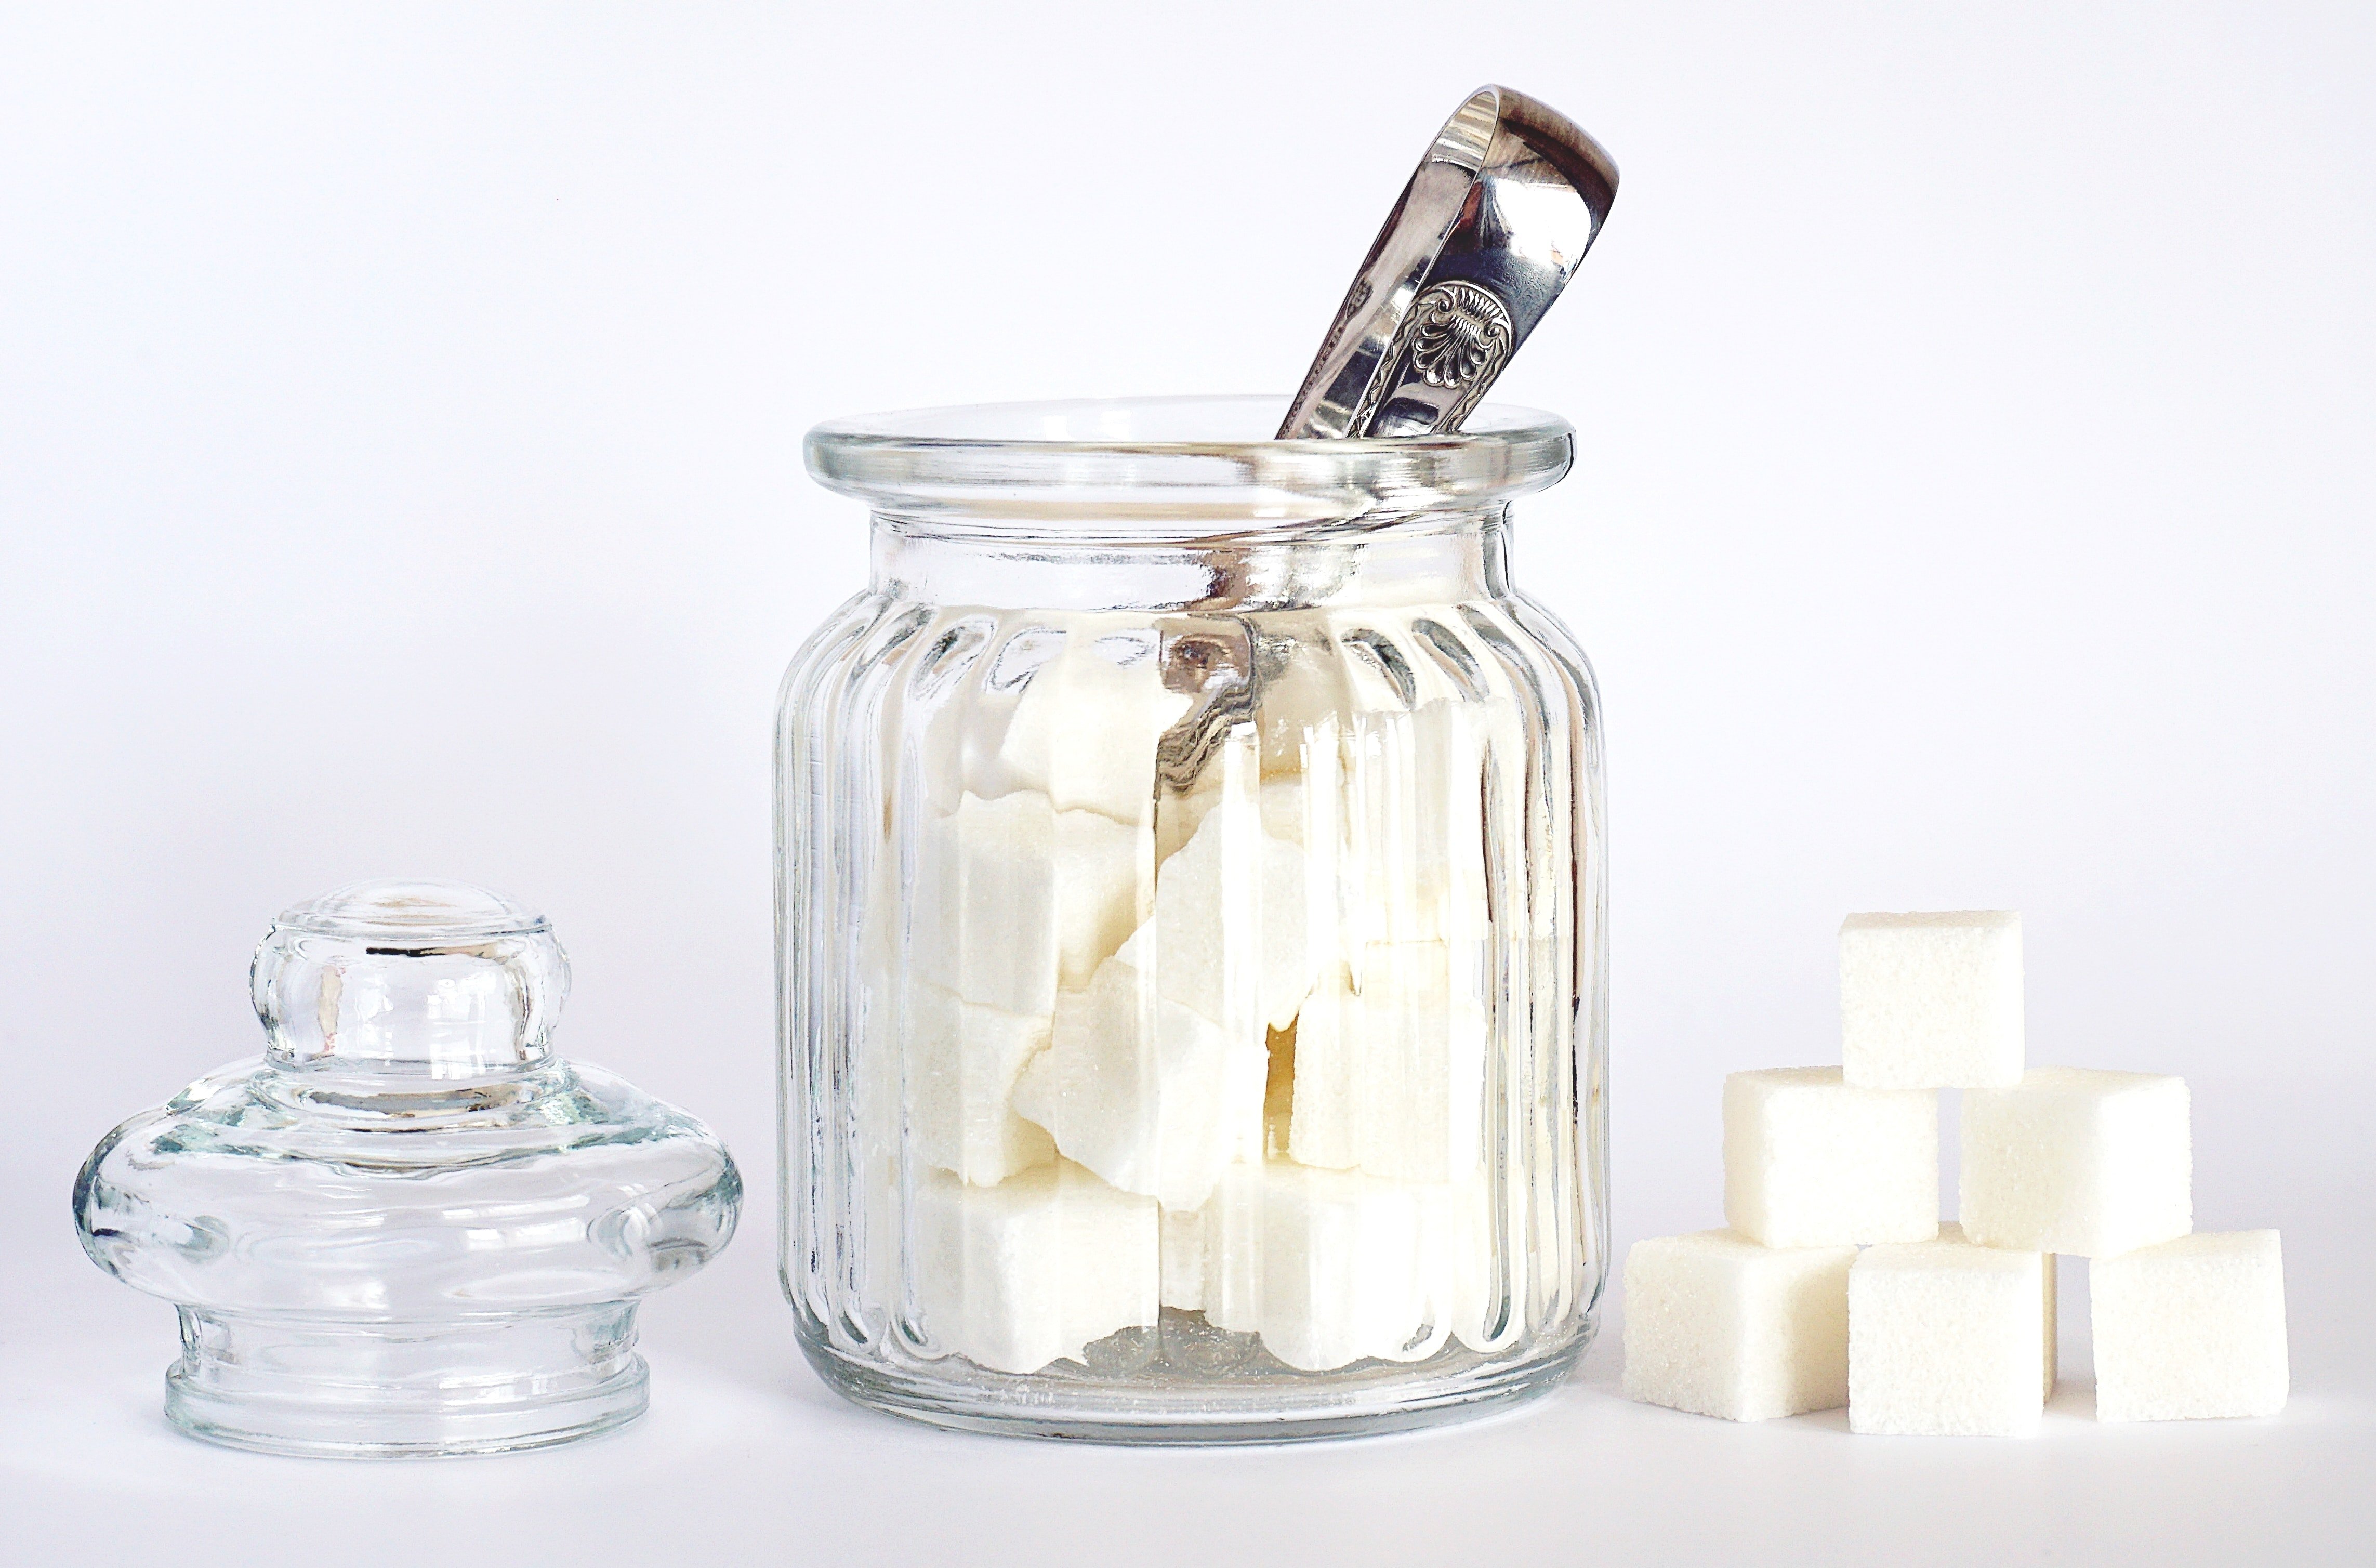 An open jar of sugar | Source: Pexels